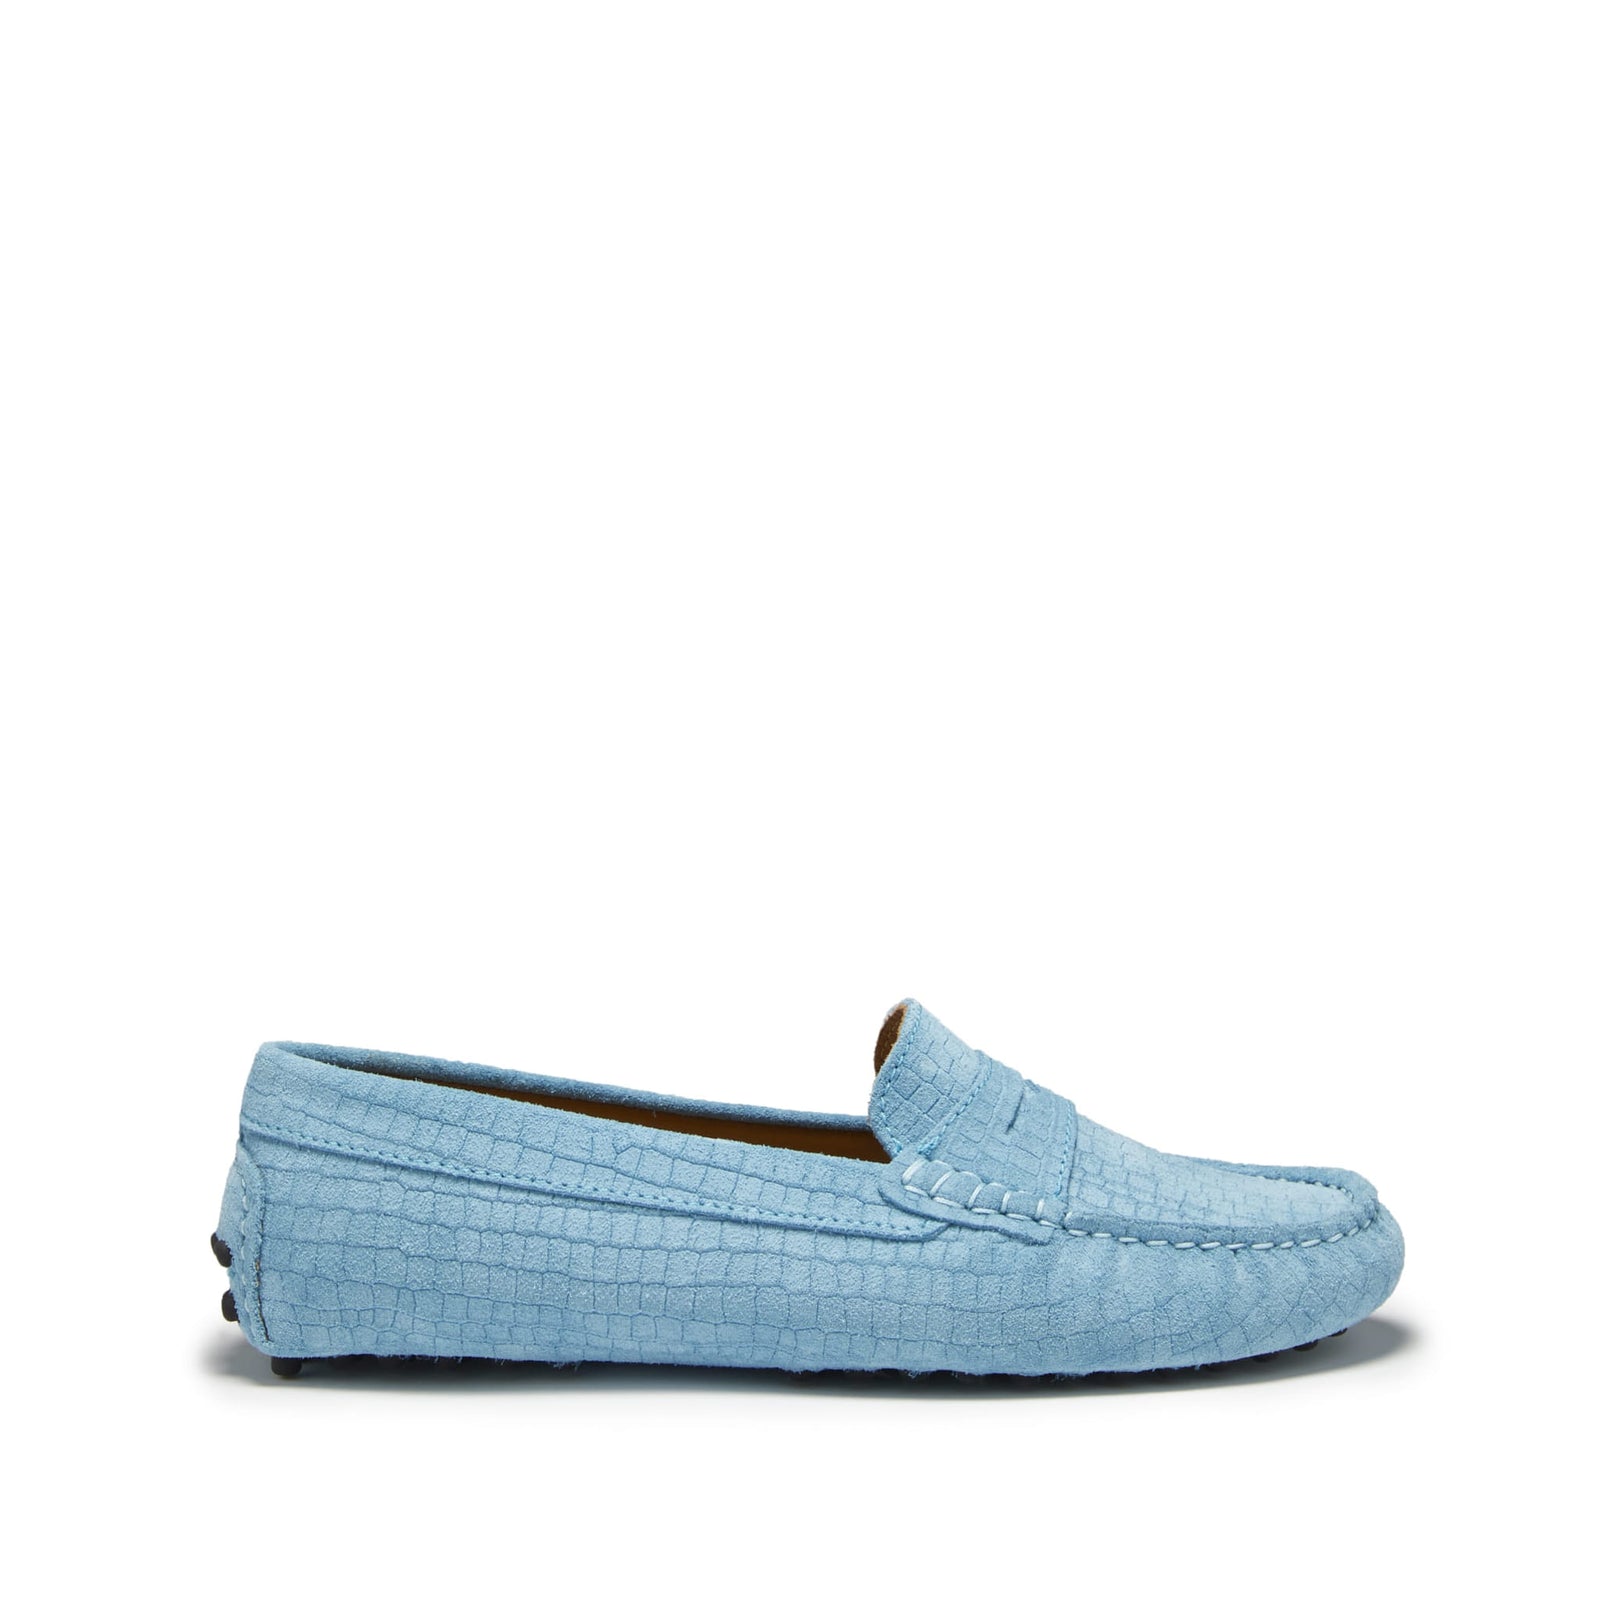 Penny Driving Loafer für Damen, blaues geprägtes Wildleder